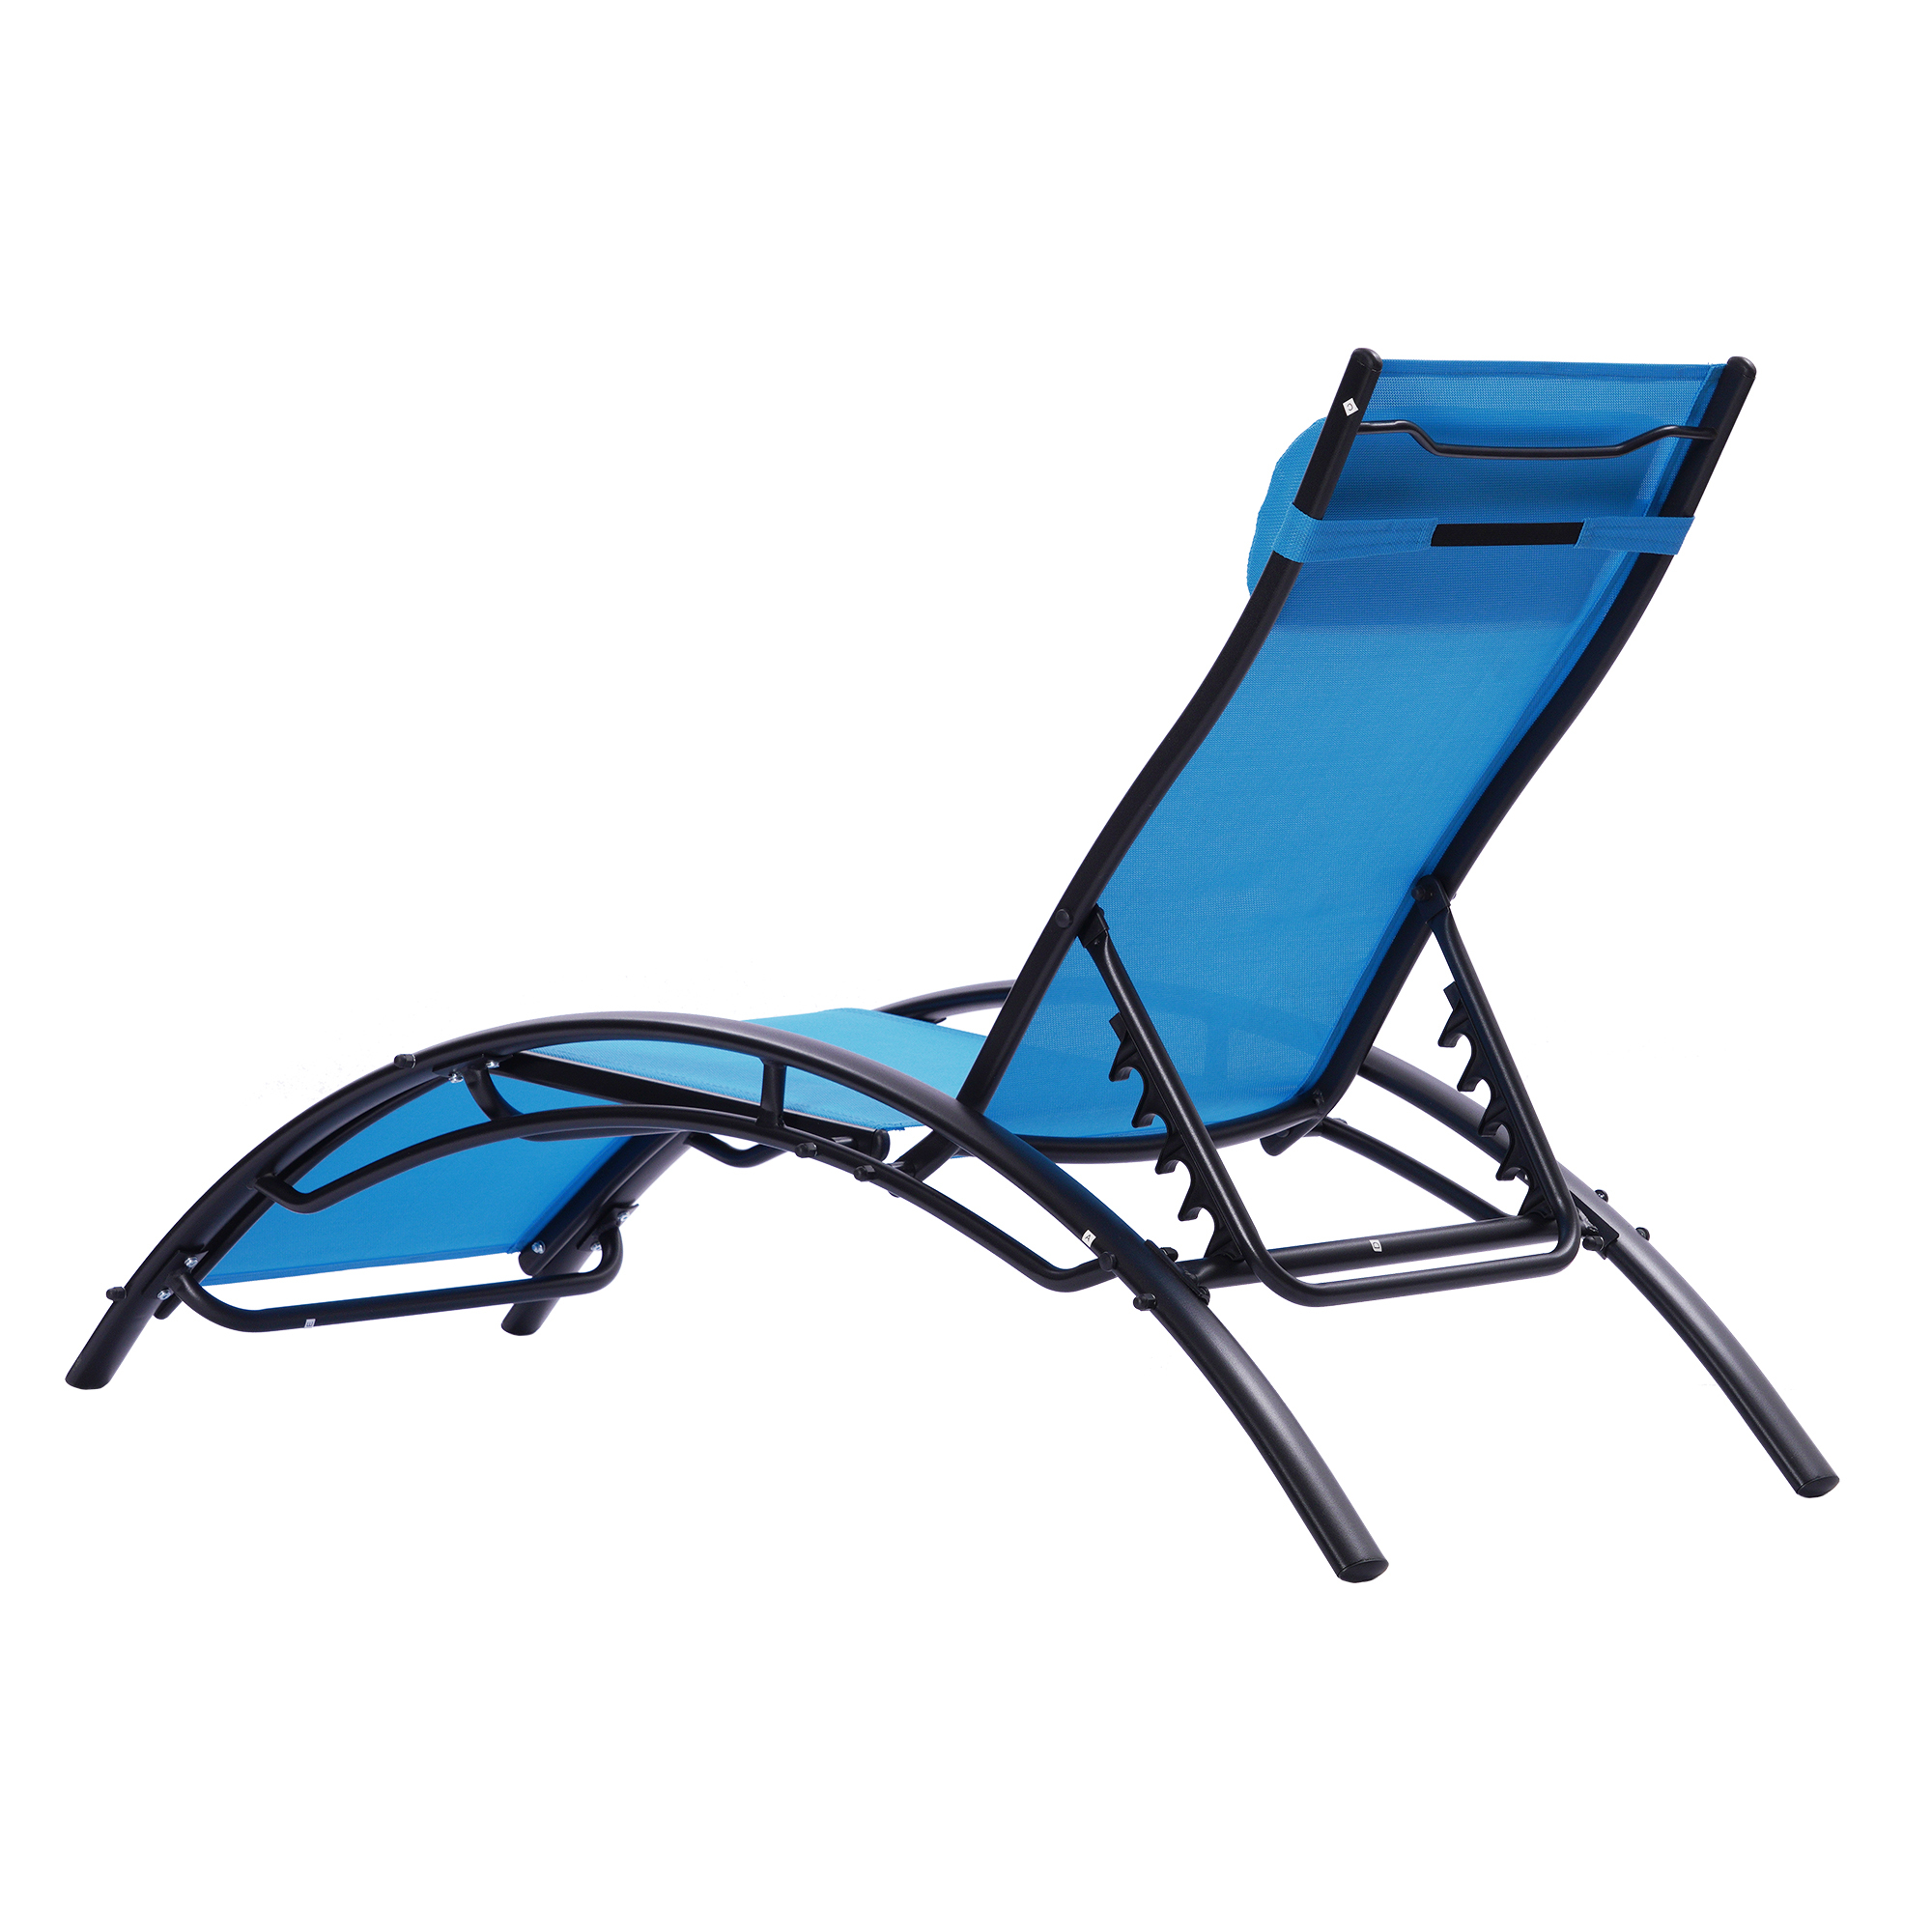 Hassch 2PCS Outdoor Chaise Lounges Aluminum Recliner Chair Beach Sun Chair, Blue - image 5 of 10